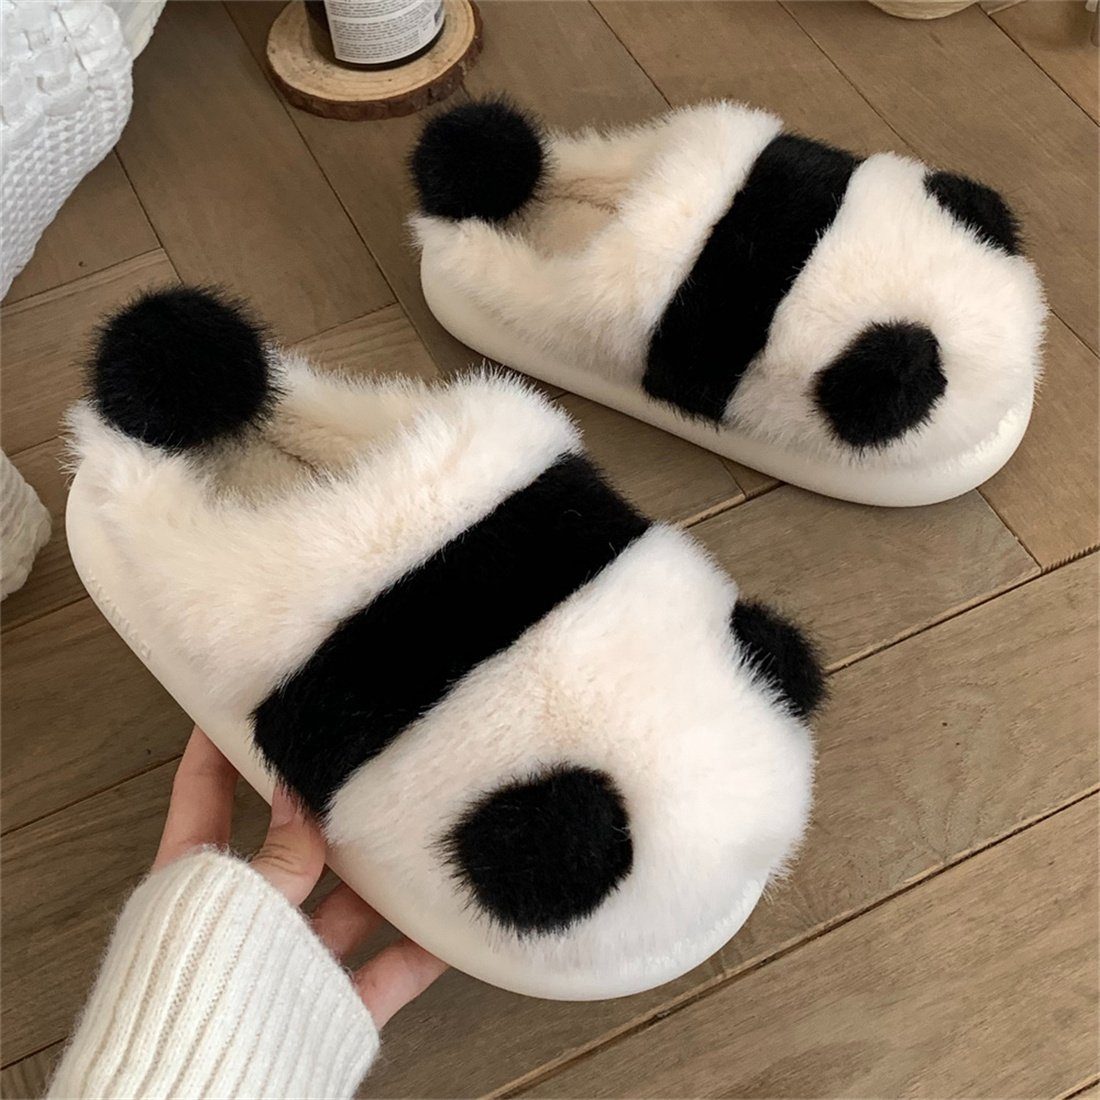 Plüsch Baumwolle Hausschuhe DÖRÖY Warme Plüsch Panda Hausschuhe, Schuhe Baumwolle Winter Damen